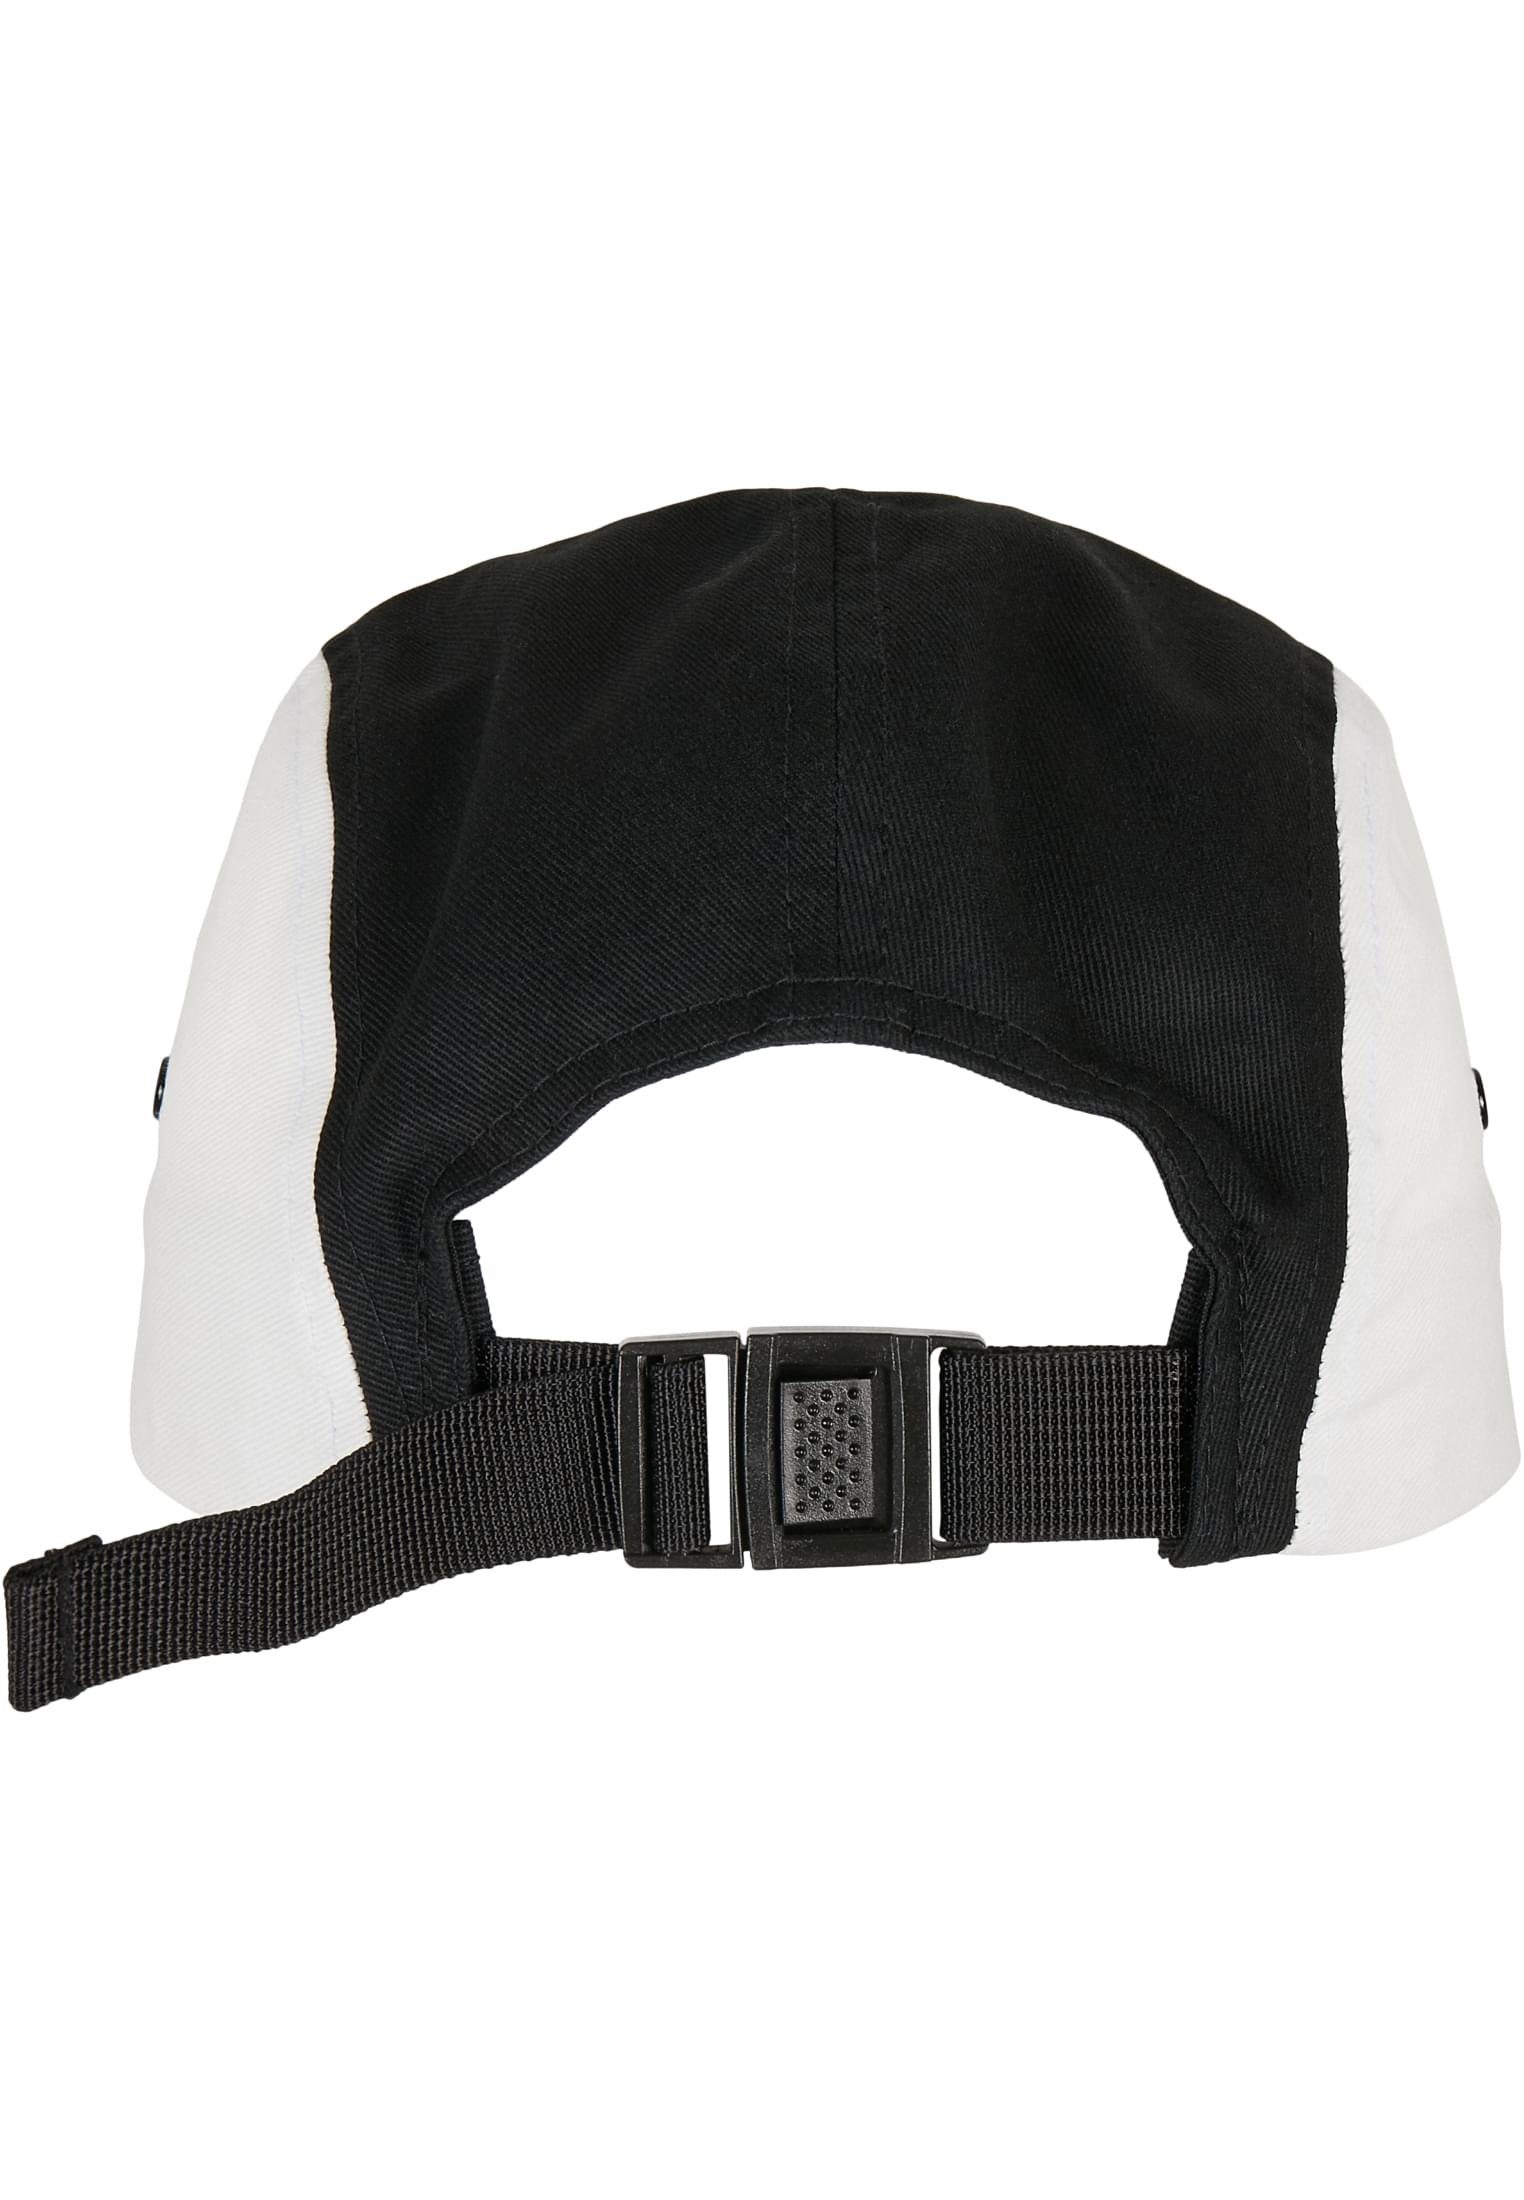 Label Snapback Black Starter black/white Cap Accessoires Fresh Cap Jockey